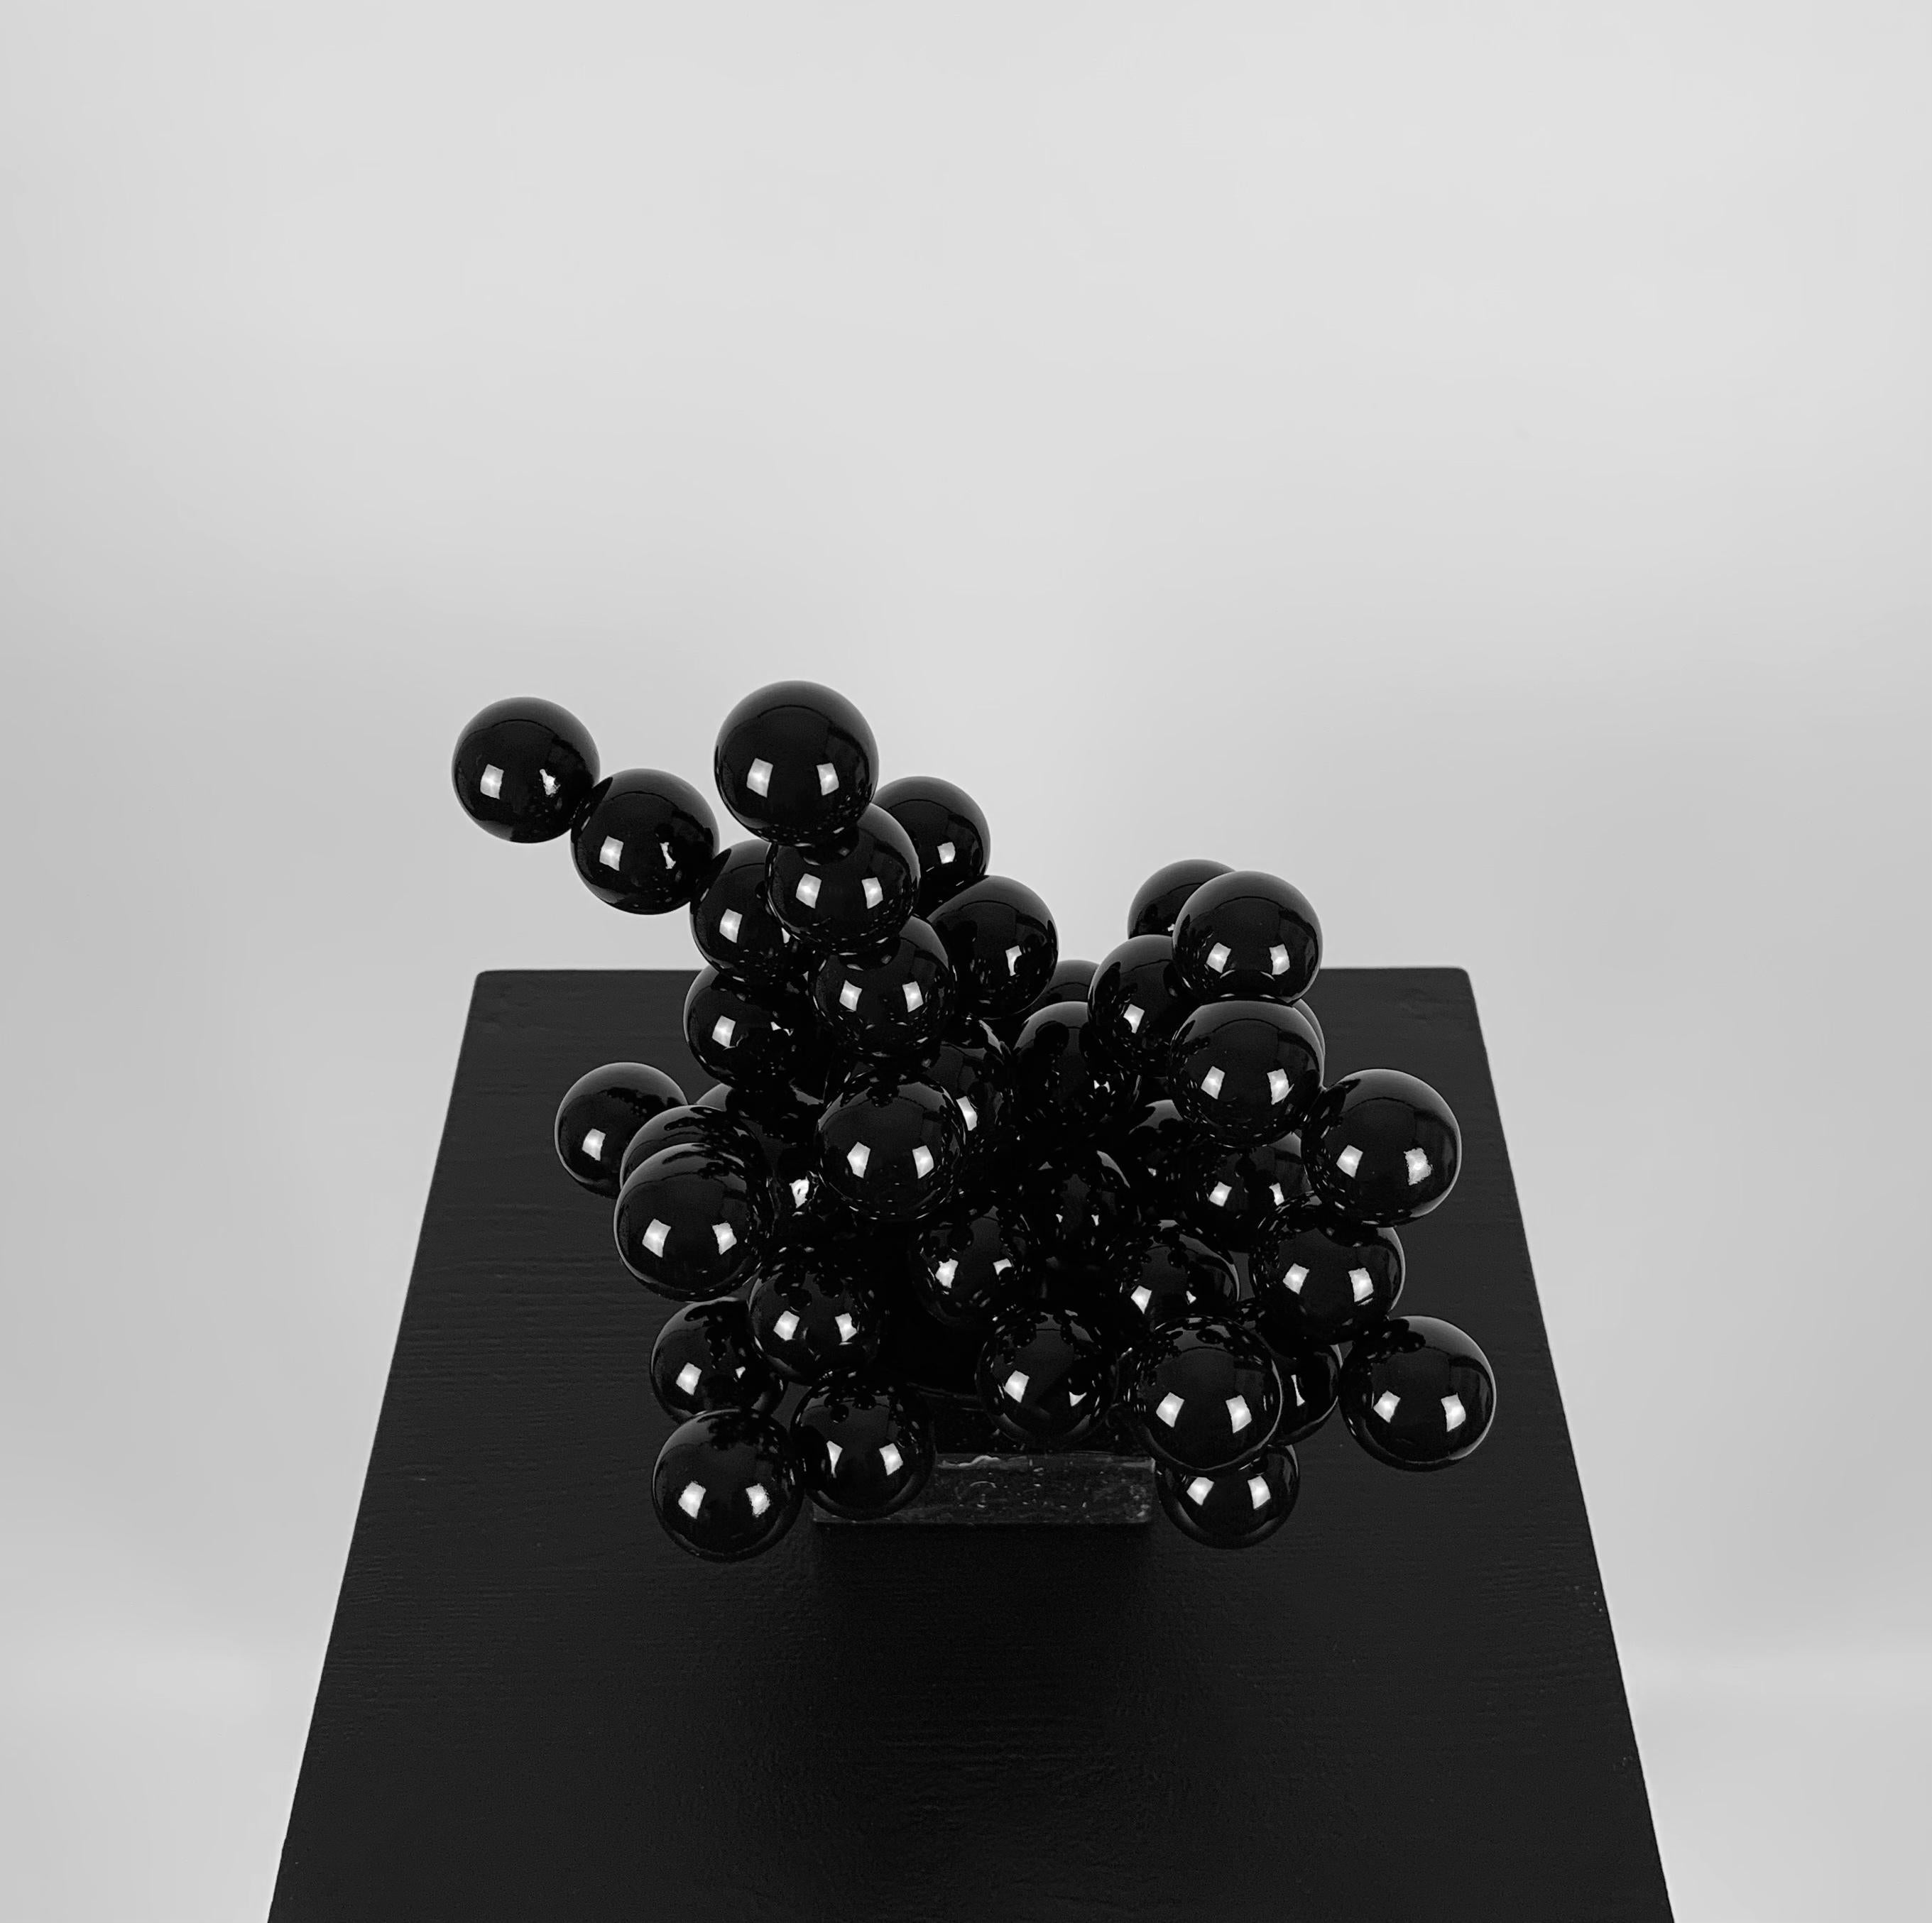 Splash Sphere Sculpture Steel Black Abstract Minimalist Original Art 1